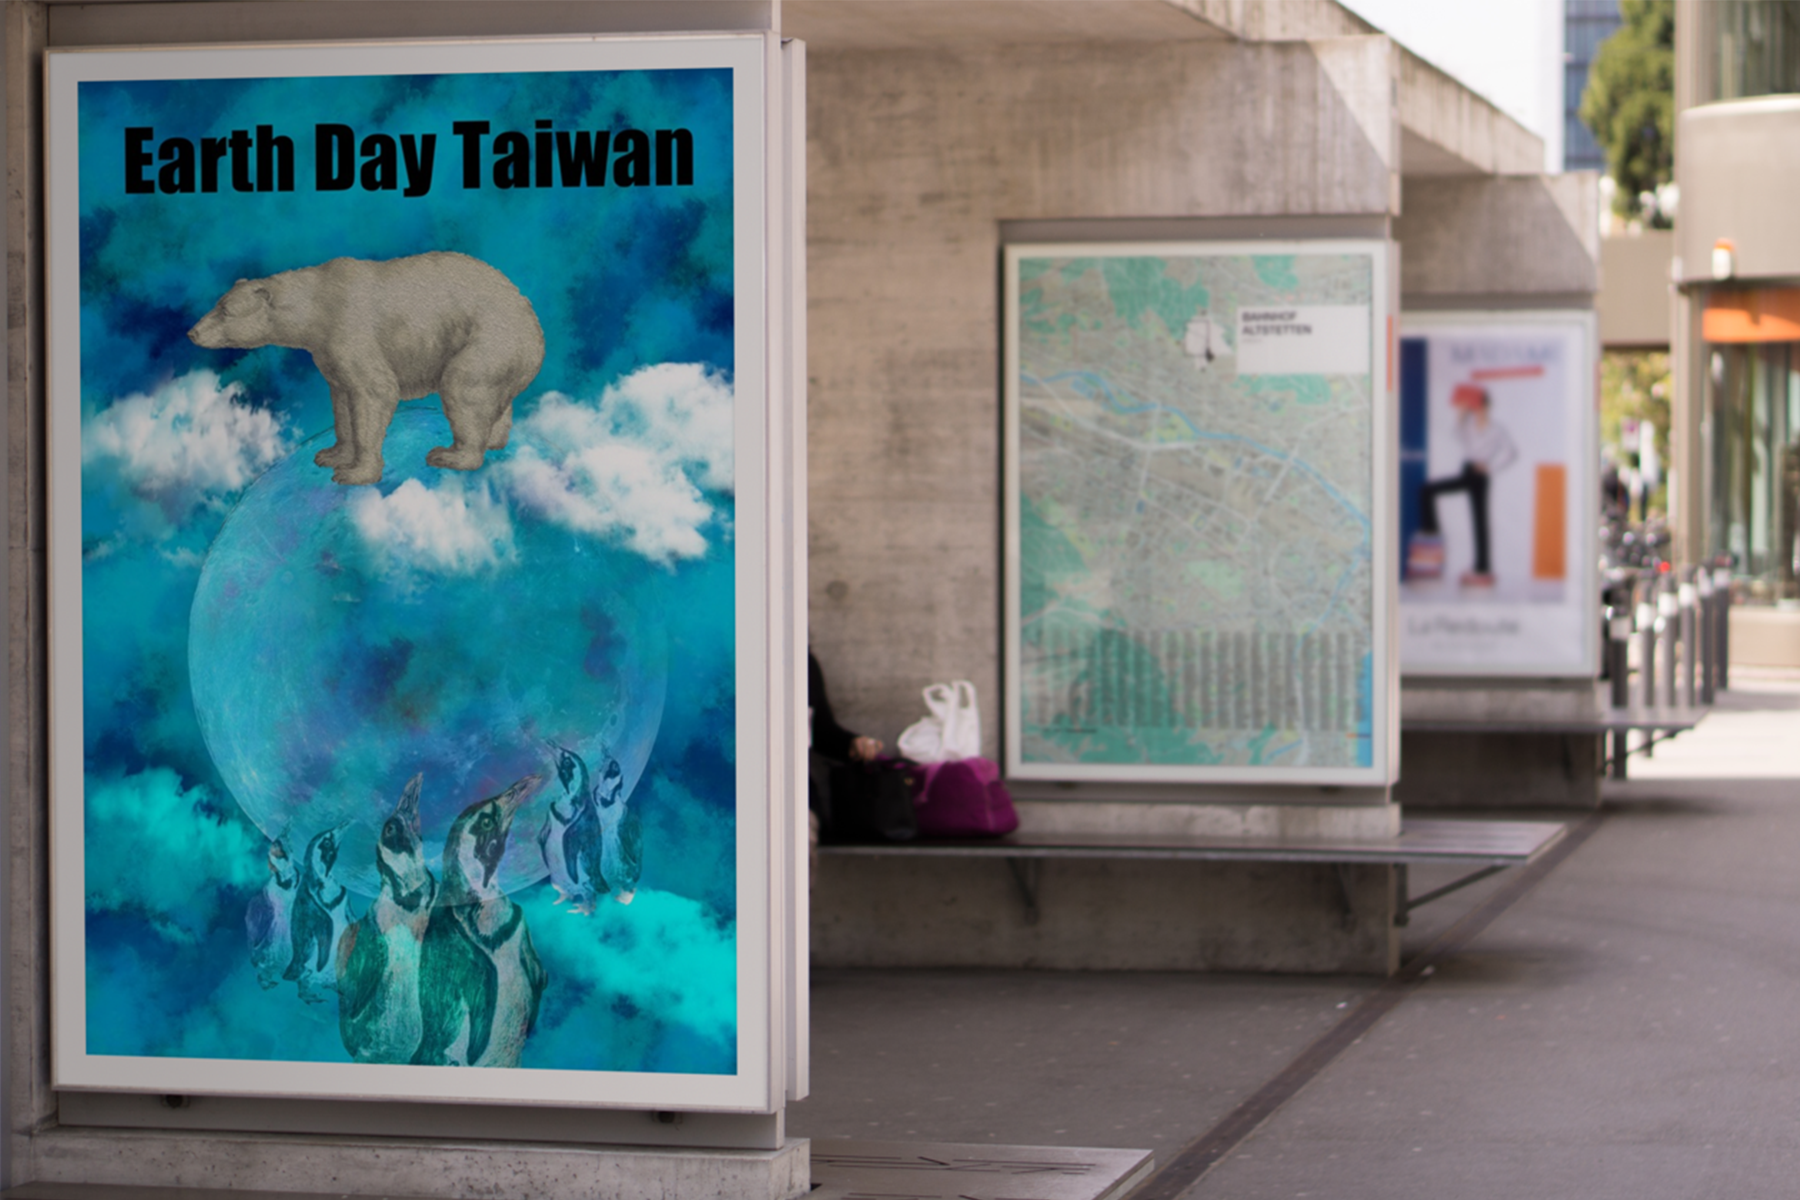 Earth Day Taiwan <br>全世界地球暖化
北極熊減少
冰原已融雪
海平面急速上升
南極生態企鵝
面臨相同問題
請重視我們的地球
接下來人類該如何
生存